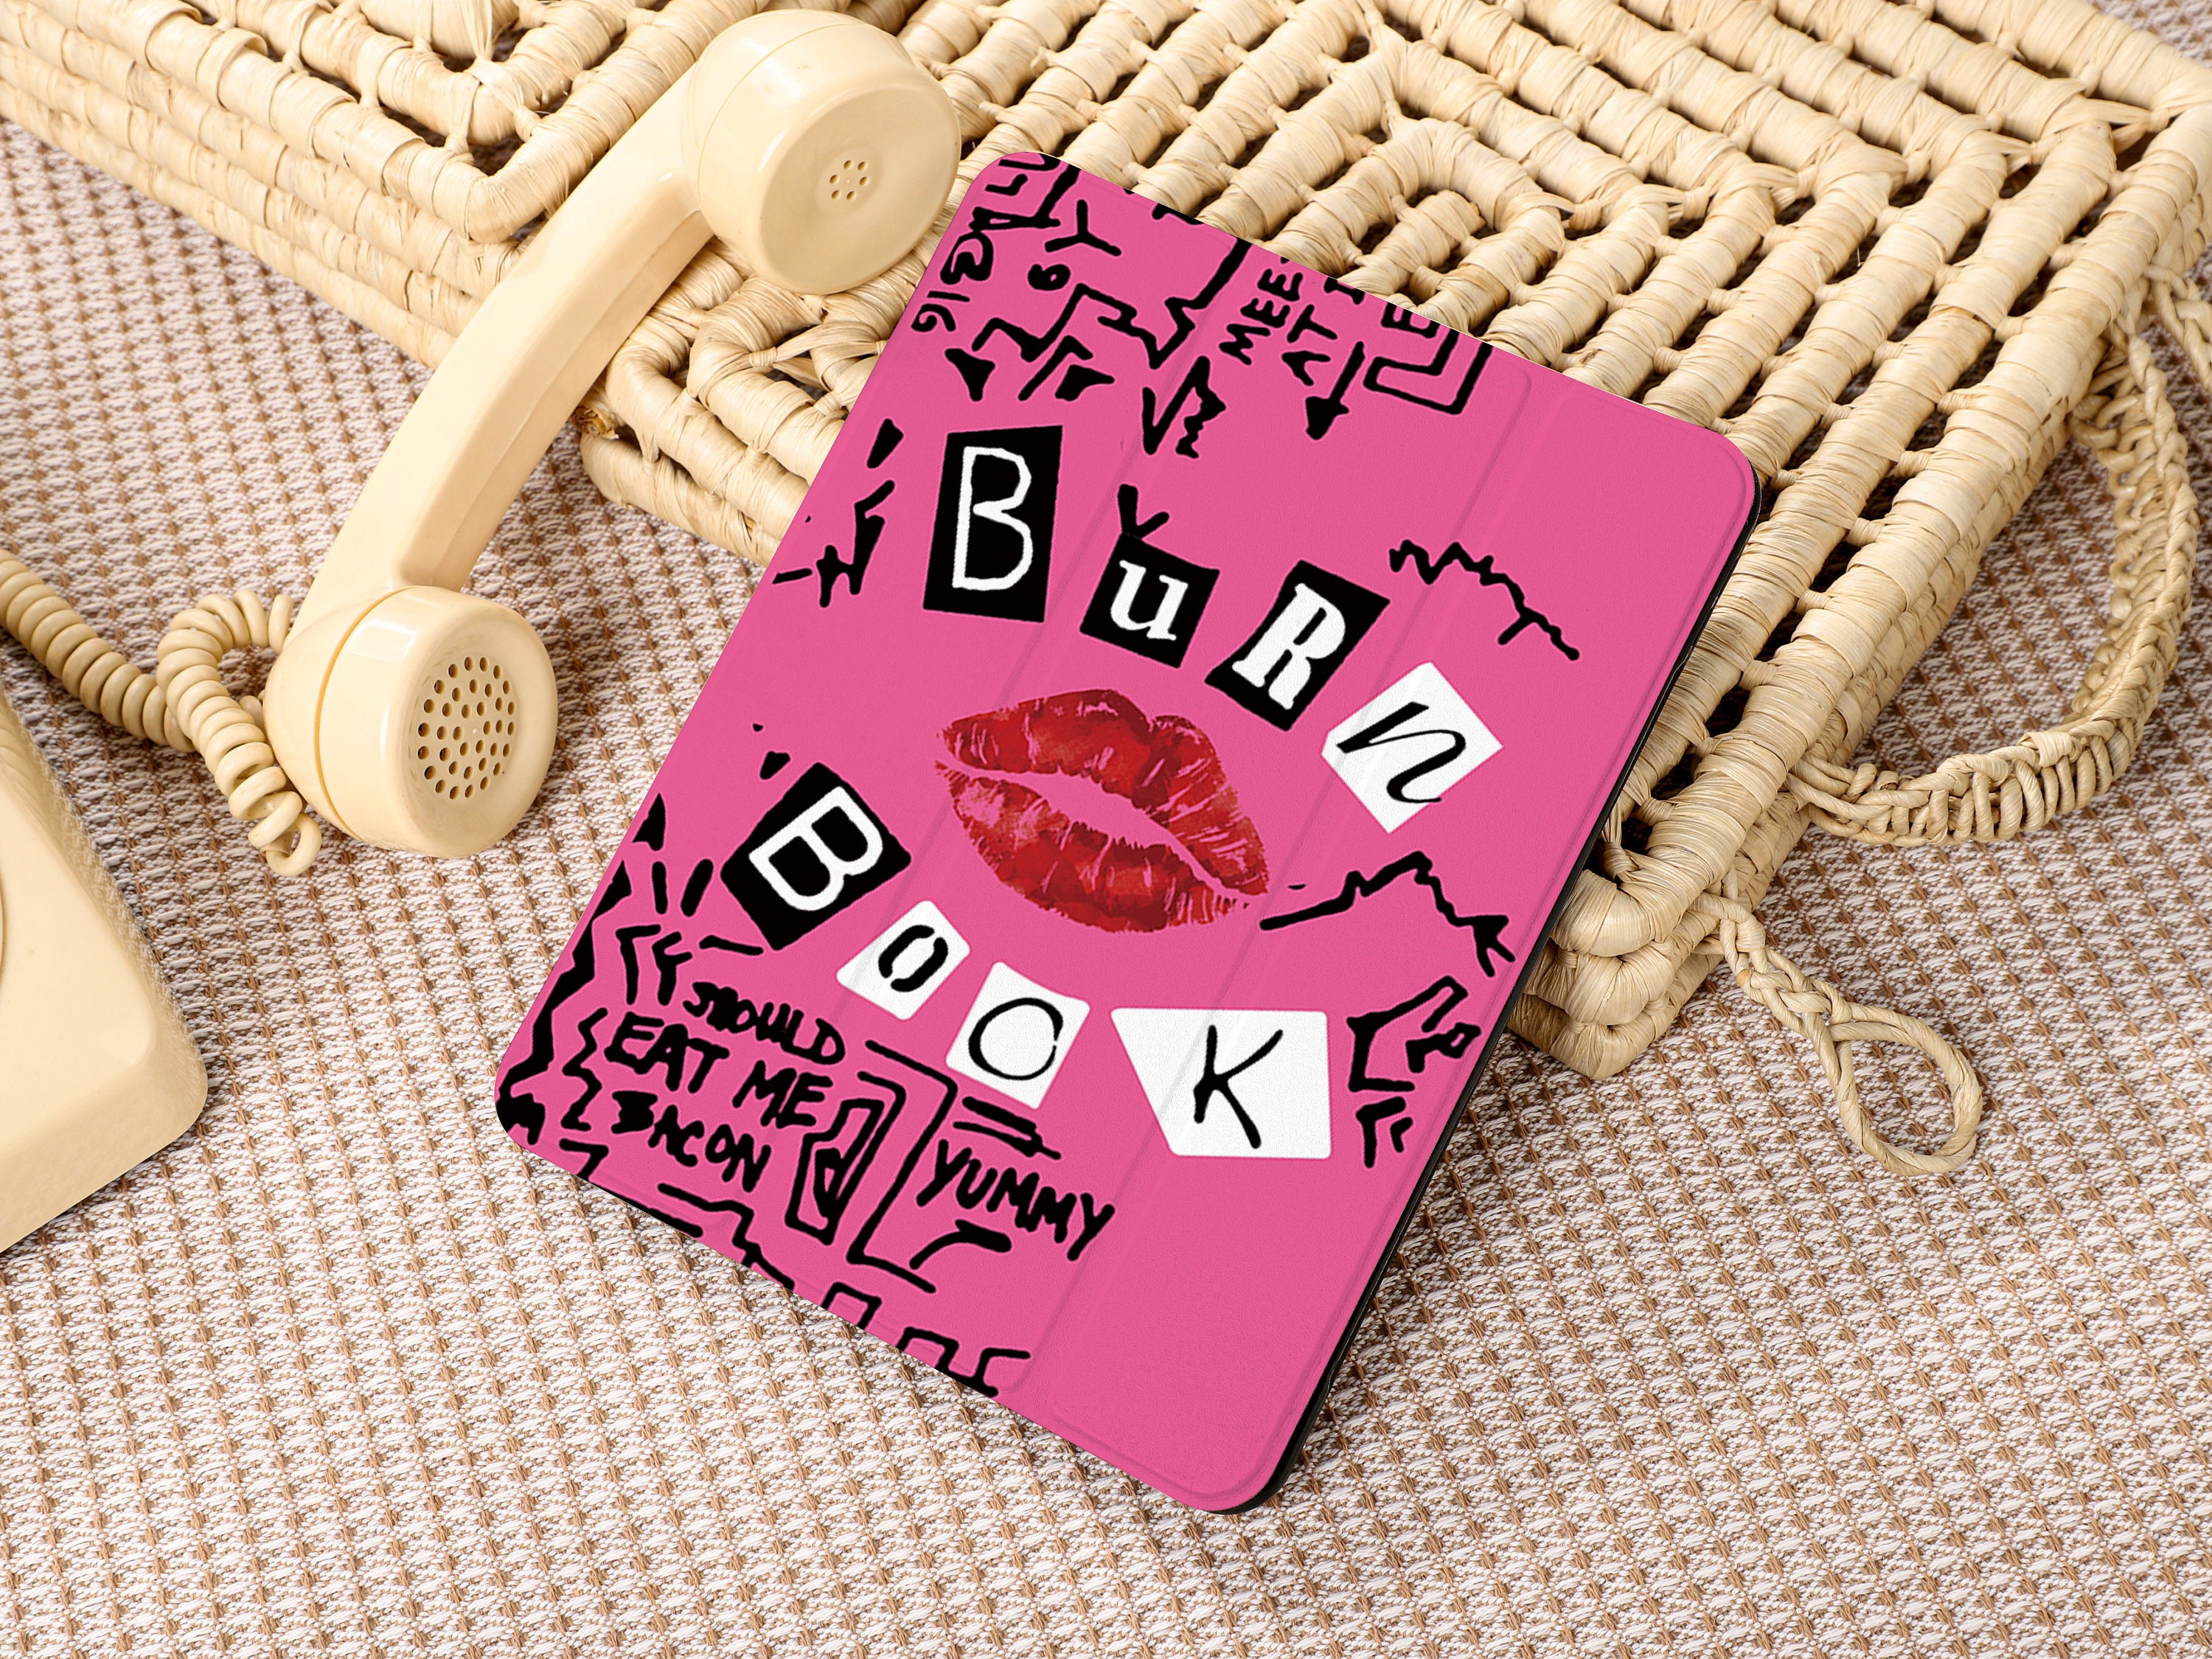 Holographic Mean Girls Sticker / Burn Book Sticker / Mean Girls / Burn Book  / Holographic Sticker / Holographic Burn Book Sticker 